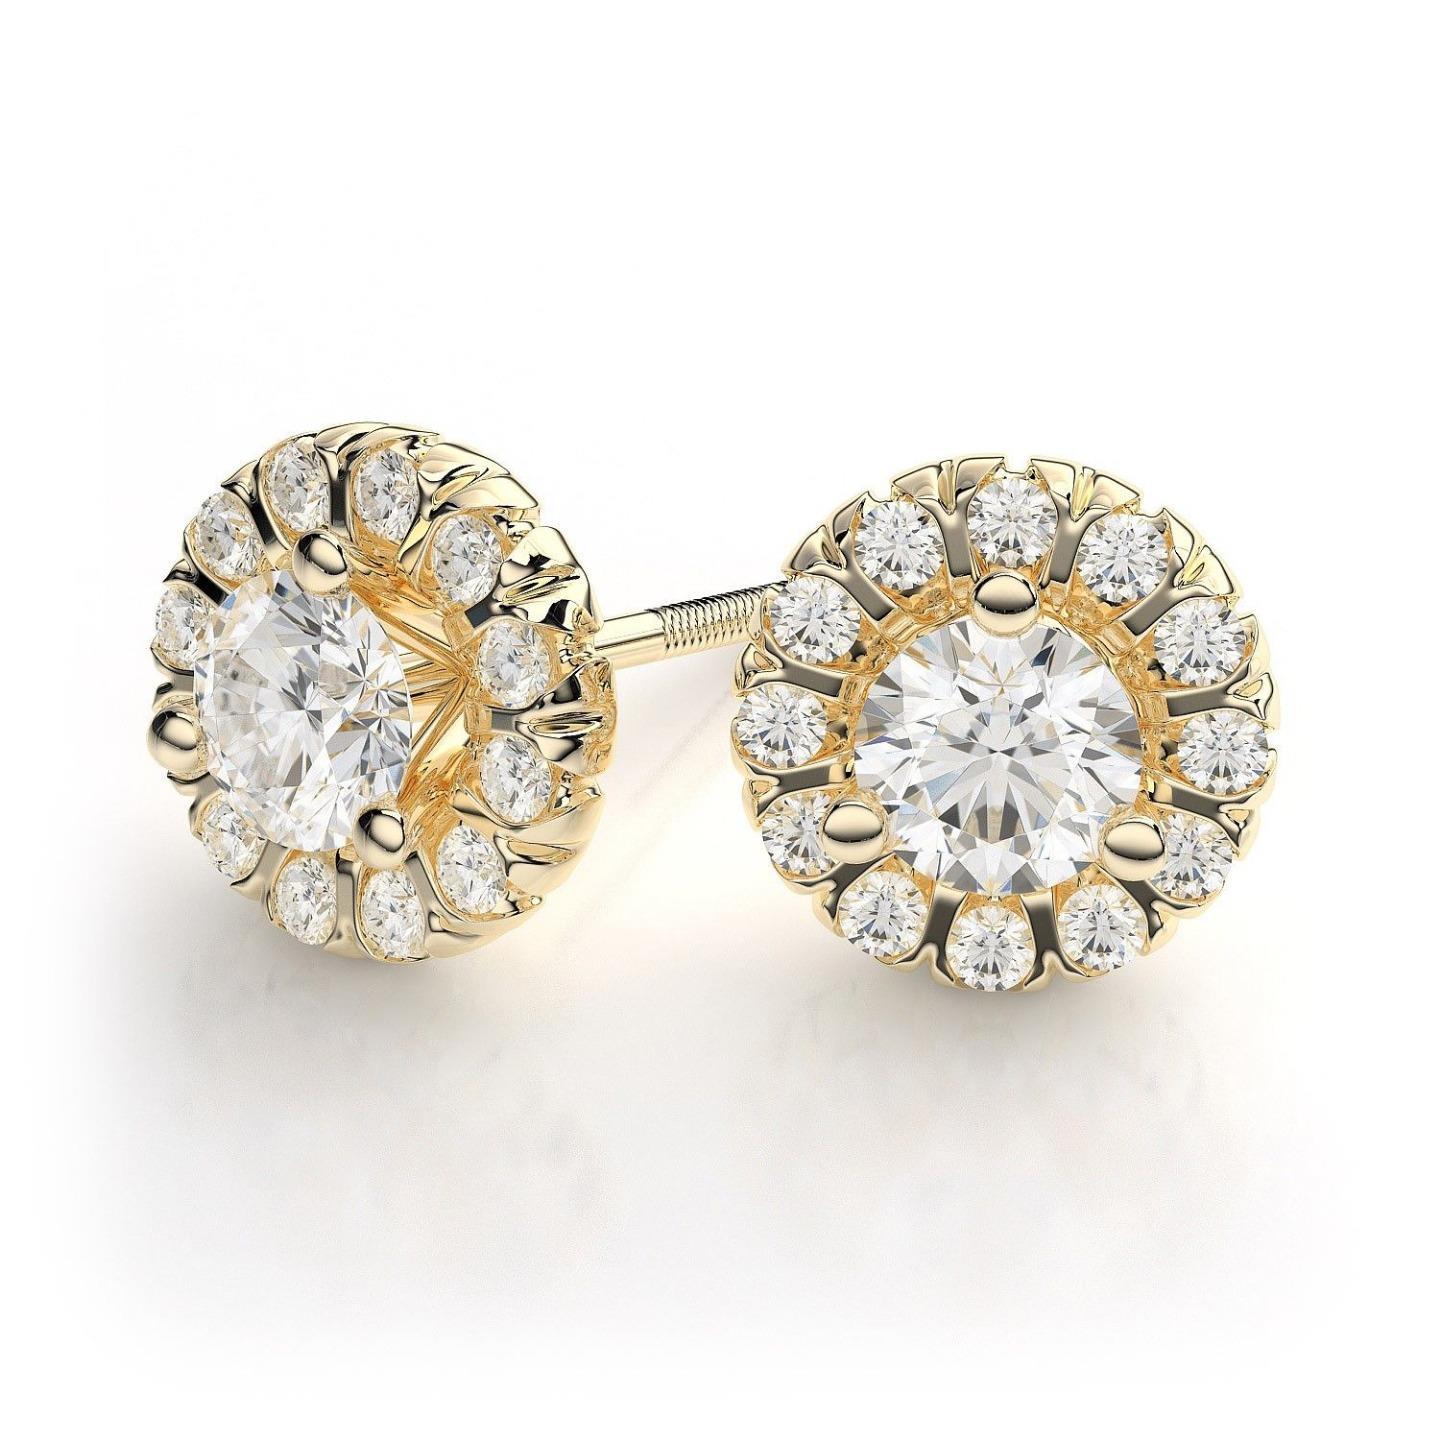 Real Diamonds Women Studs Halo Earrings 2.60 Carats Yellow Gold 14K